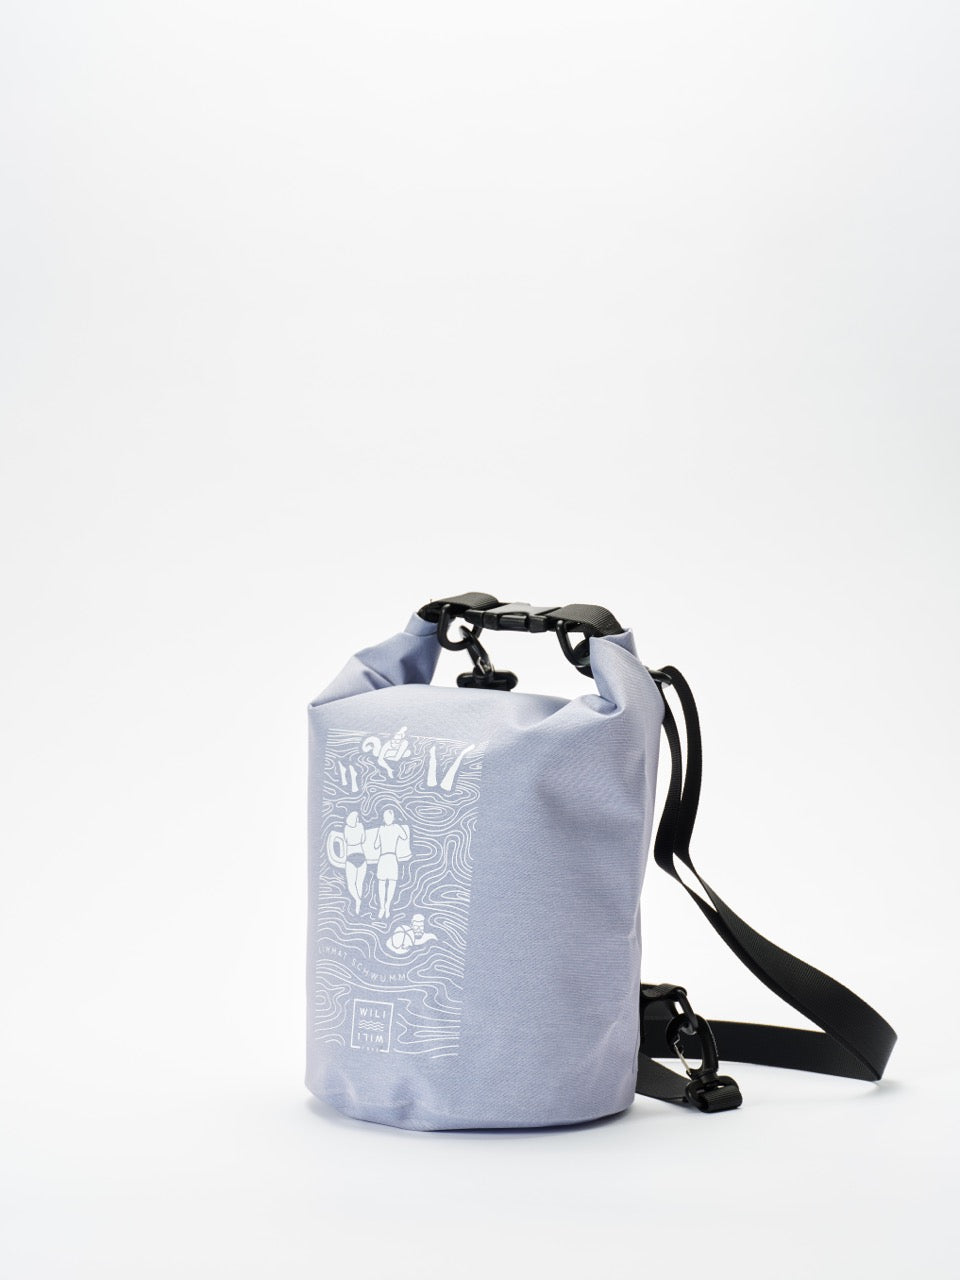 Limmat Schwumm - 7 Liter Dry Bag - Seastar Purple